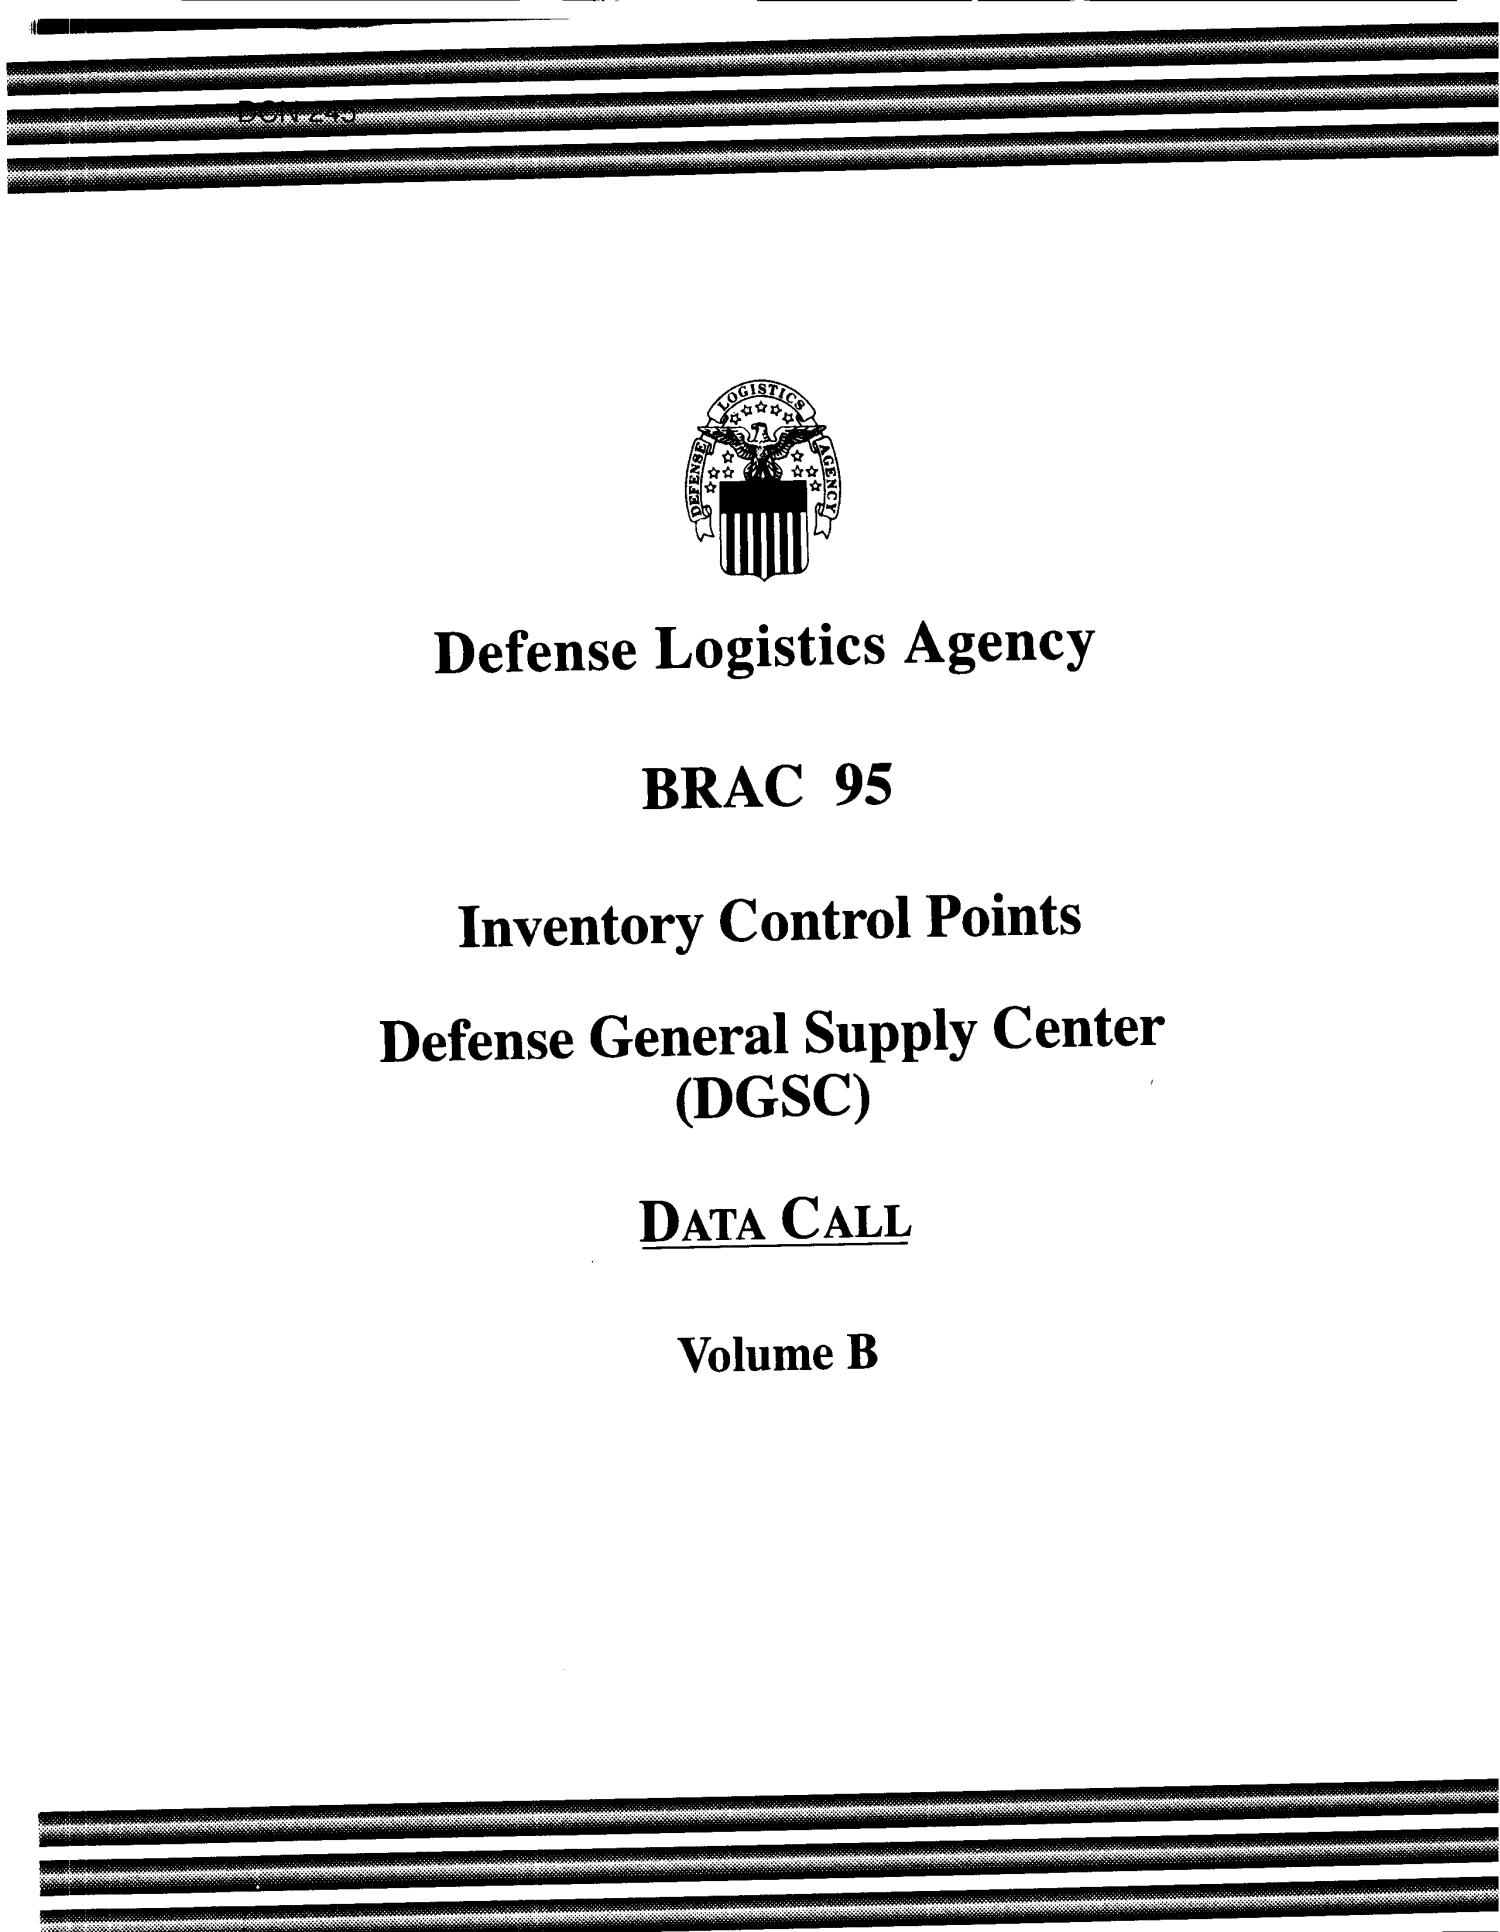 DLA - Data Call - Volume B - DGSC
                                                
                                                    [Sequence #]: 1 of 1600
                                                